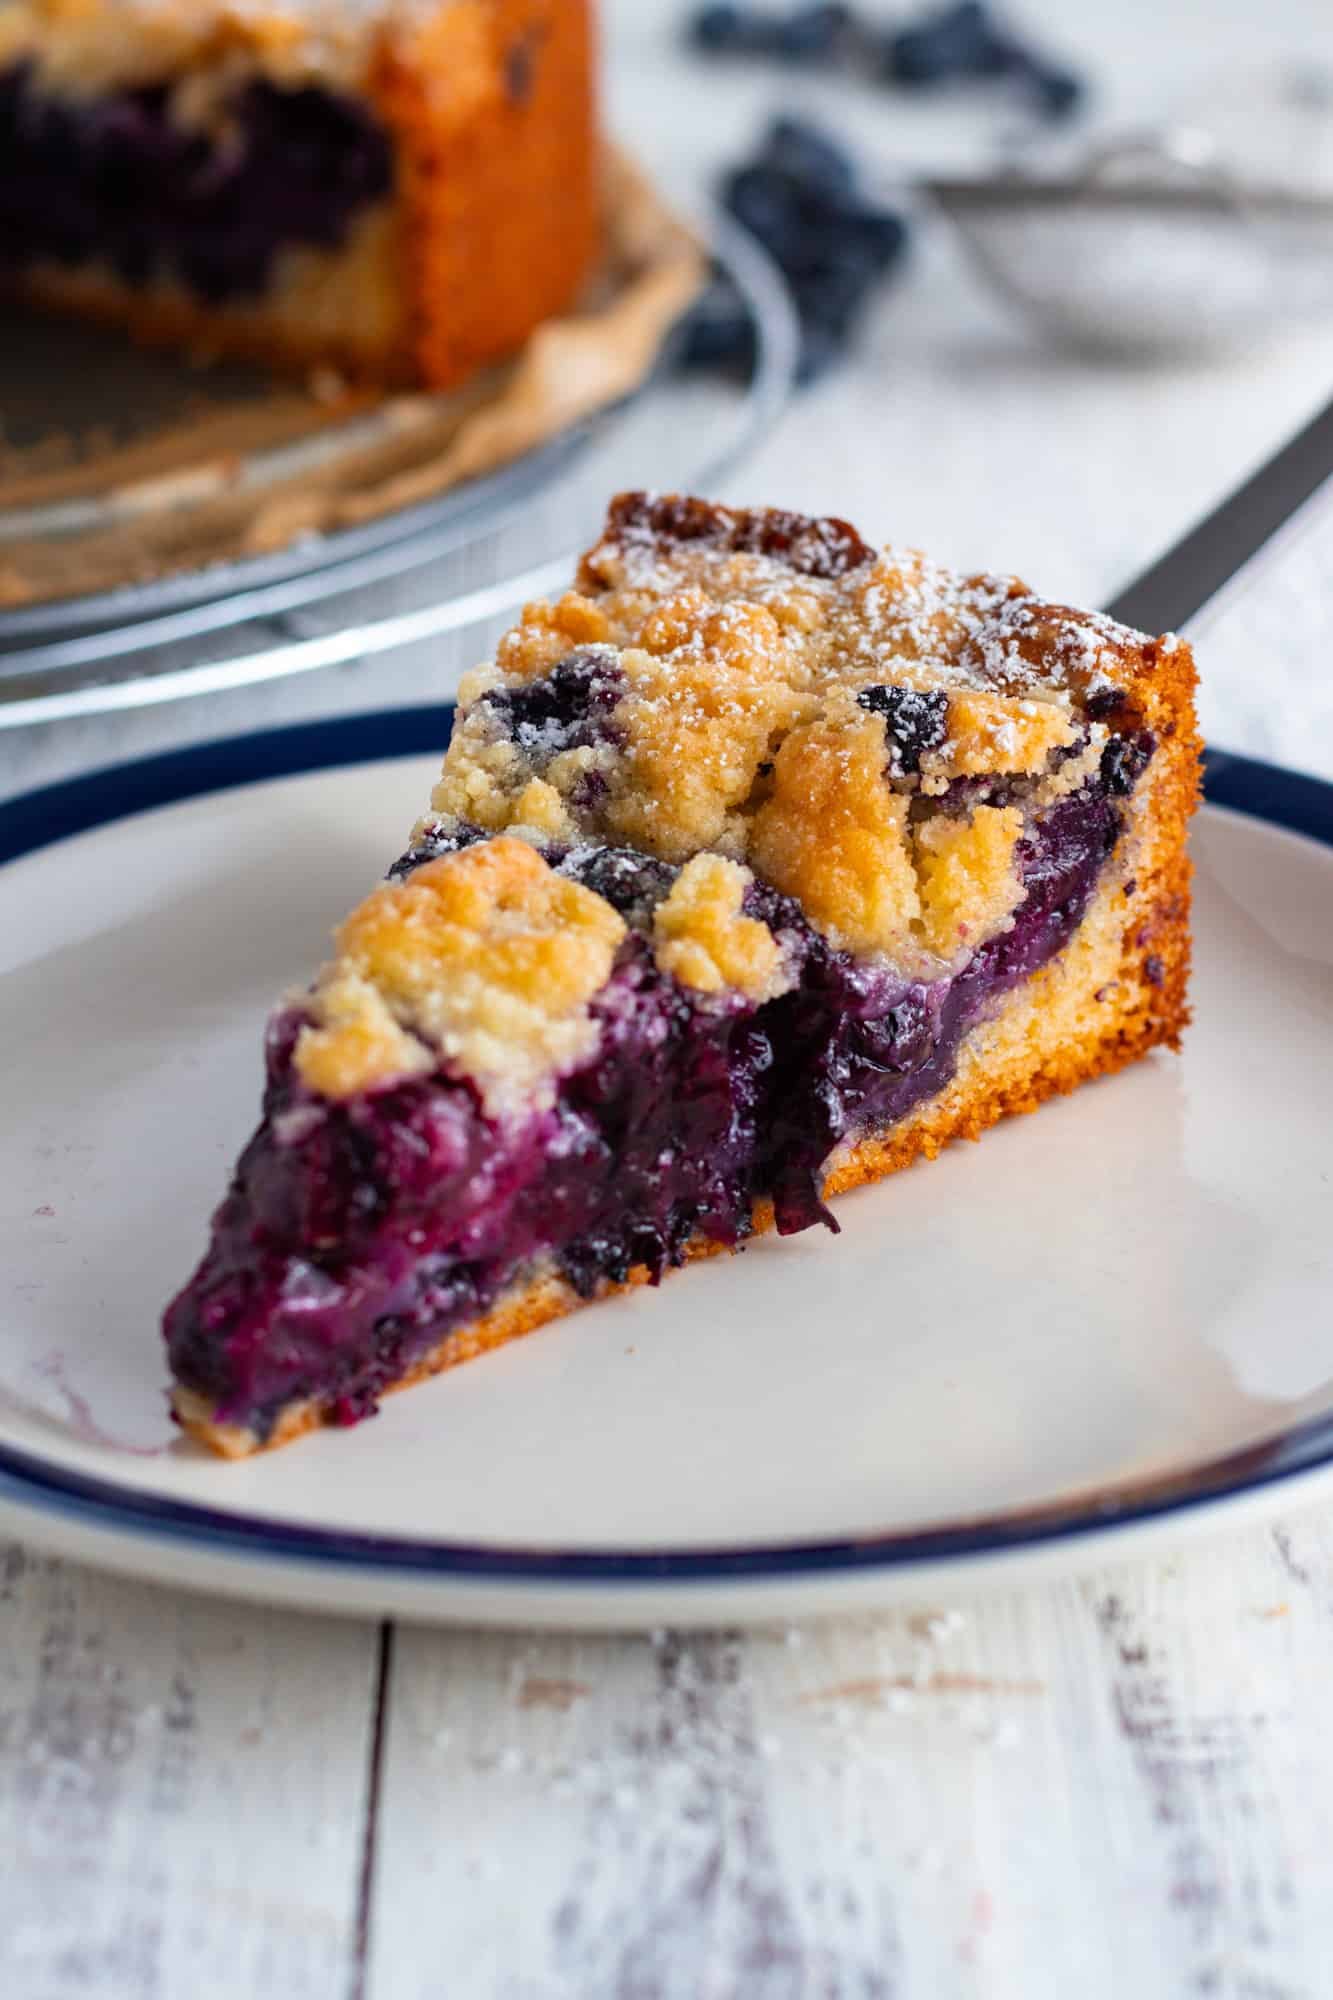 Blueberry Streusel Cake slice on a plate.